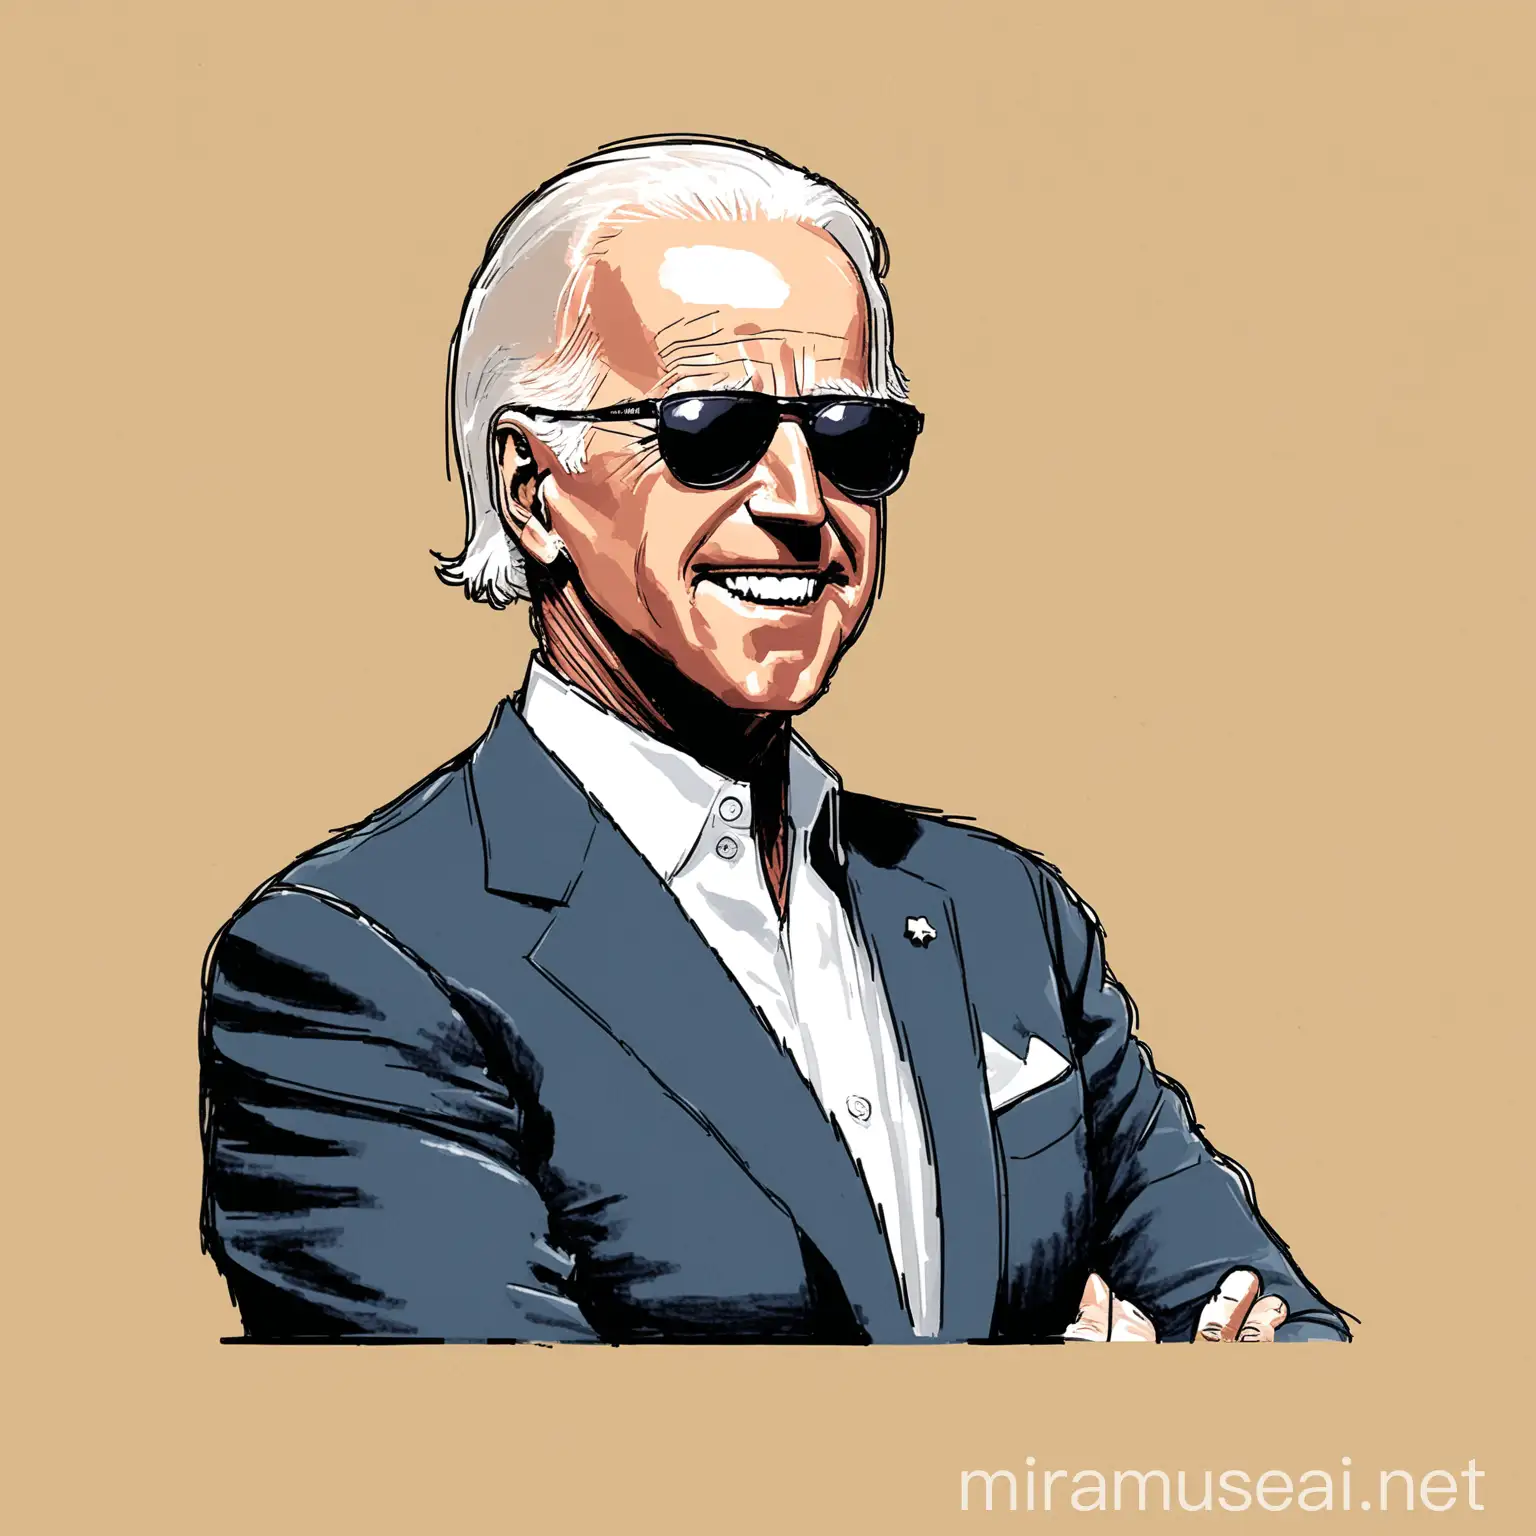 HandDrawn Illustration of Joe Biden Wearing Sunglasses